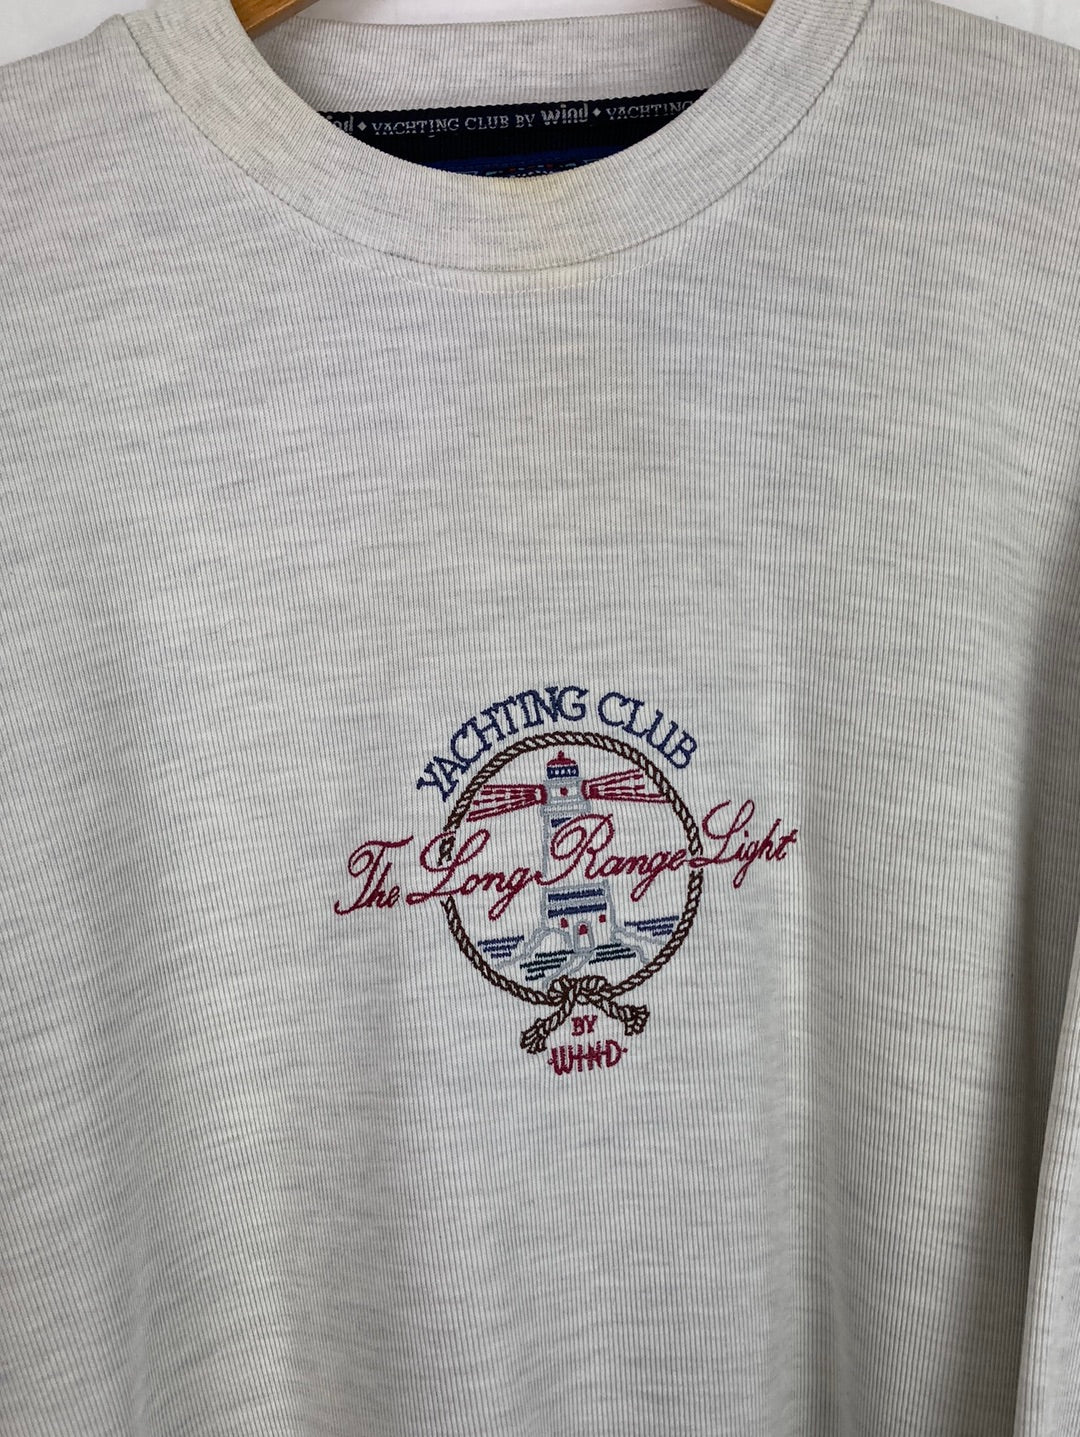 Wind Yachting Club Sweater (L)